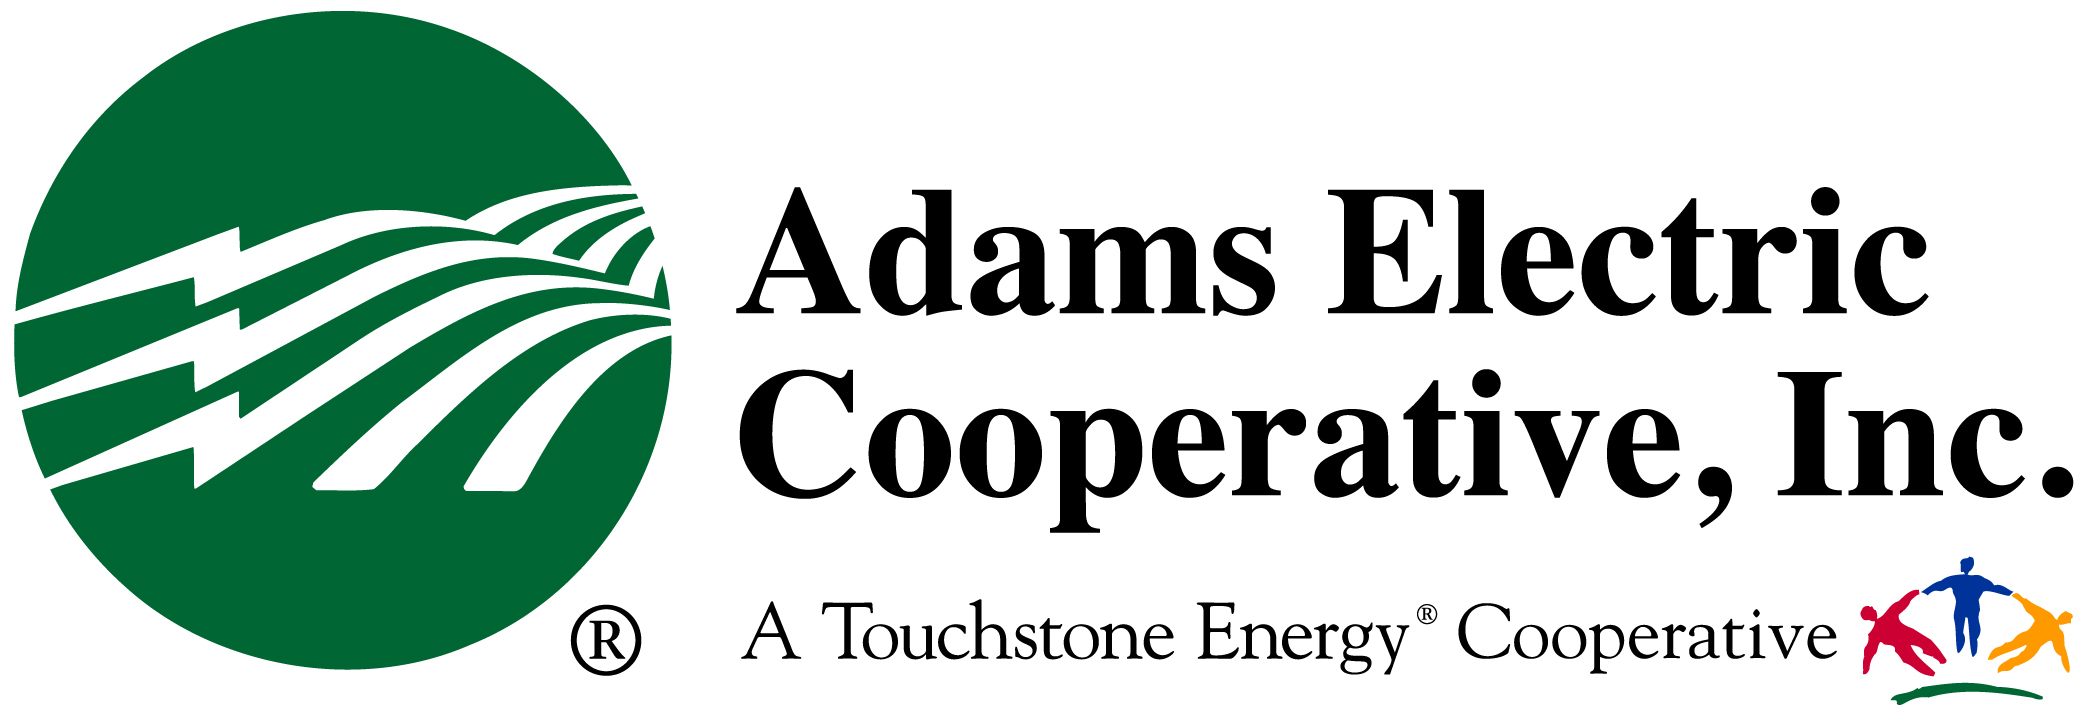 Adams Electric Cooperative Inc Logo